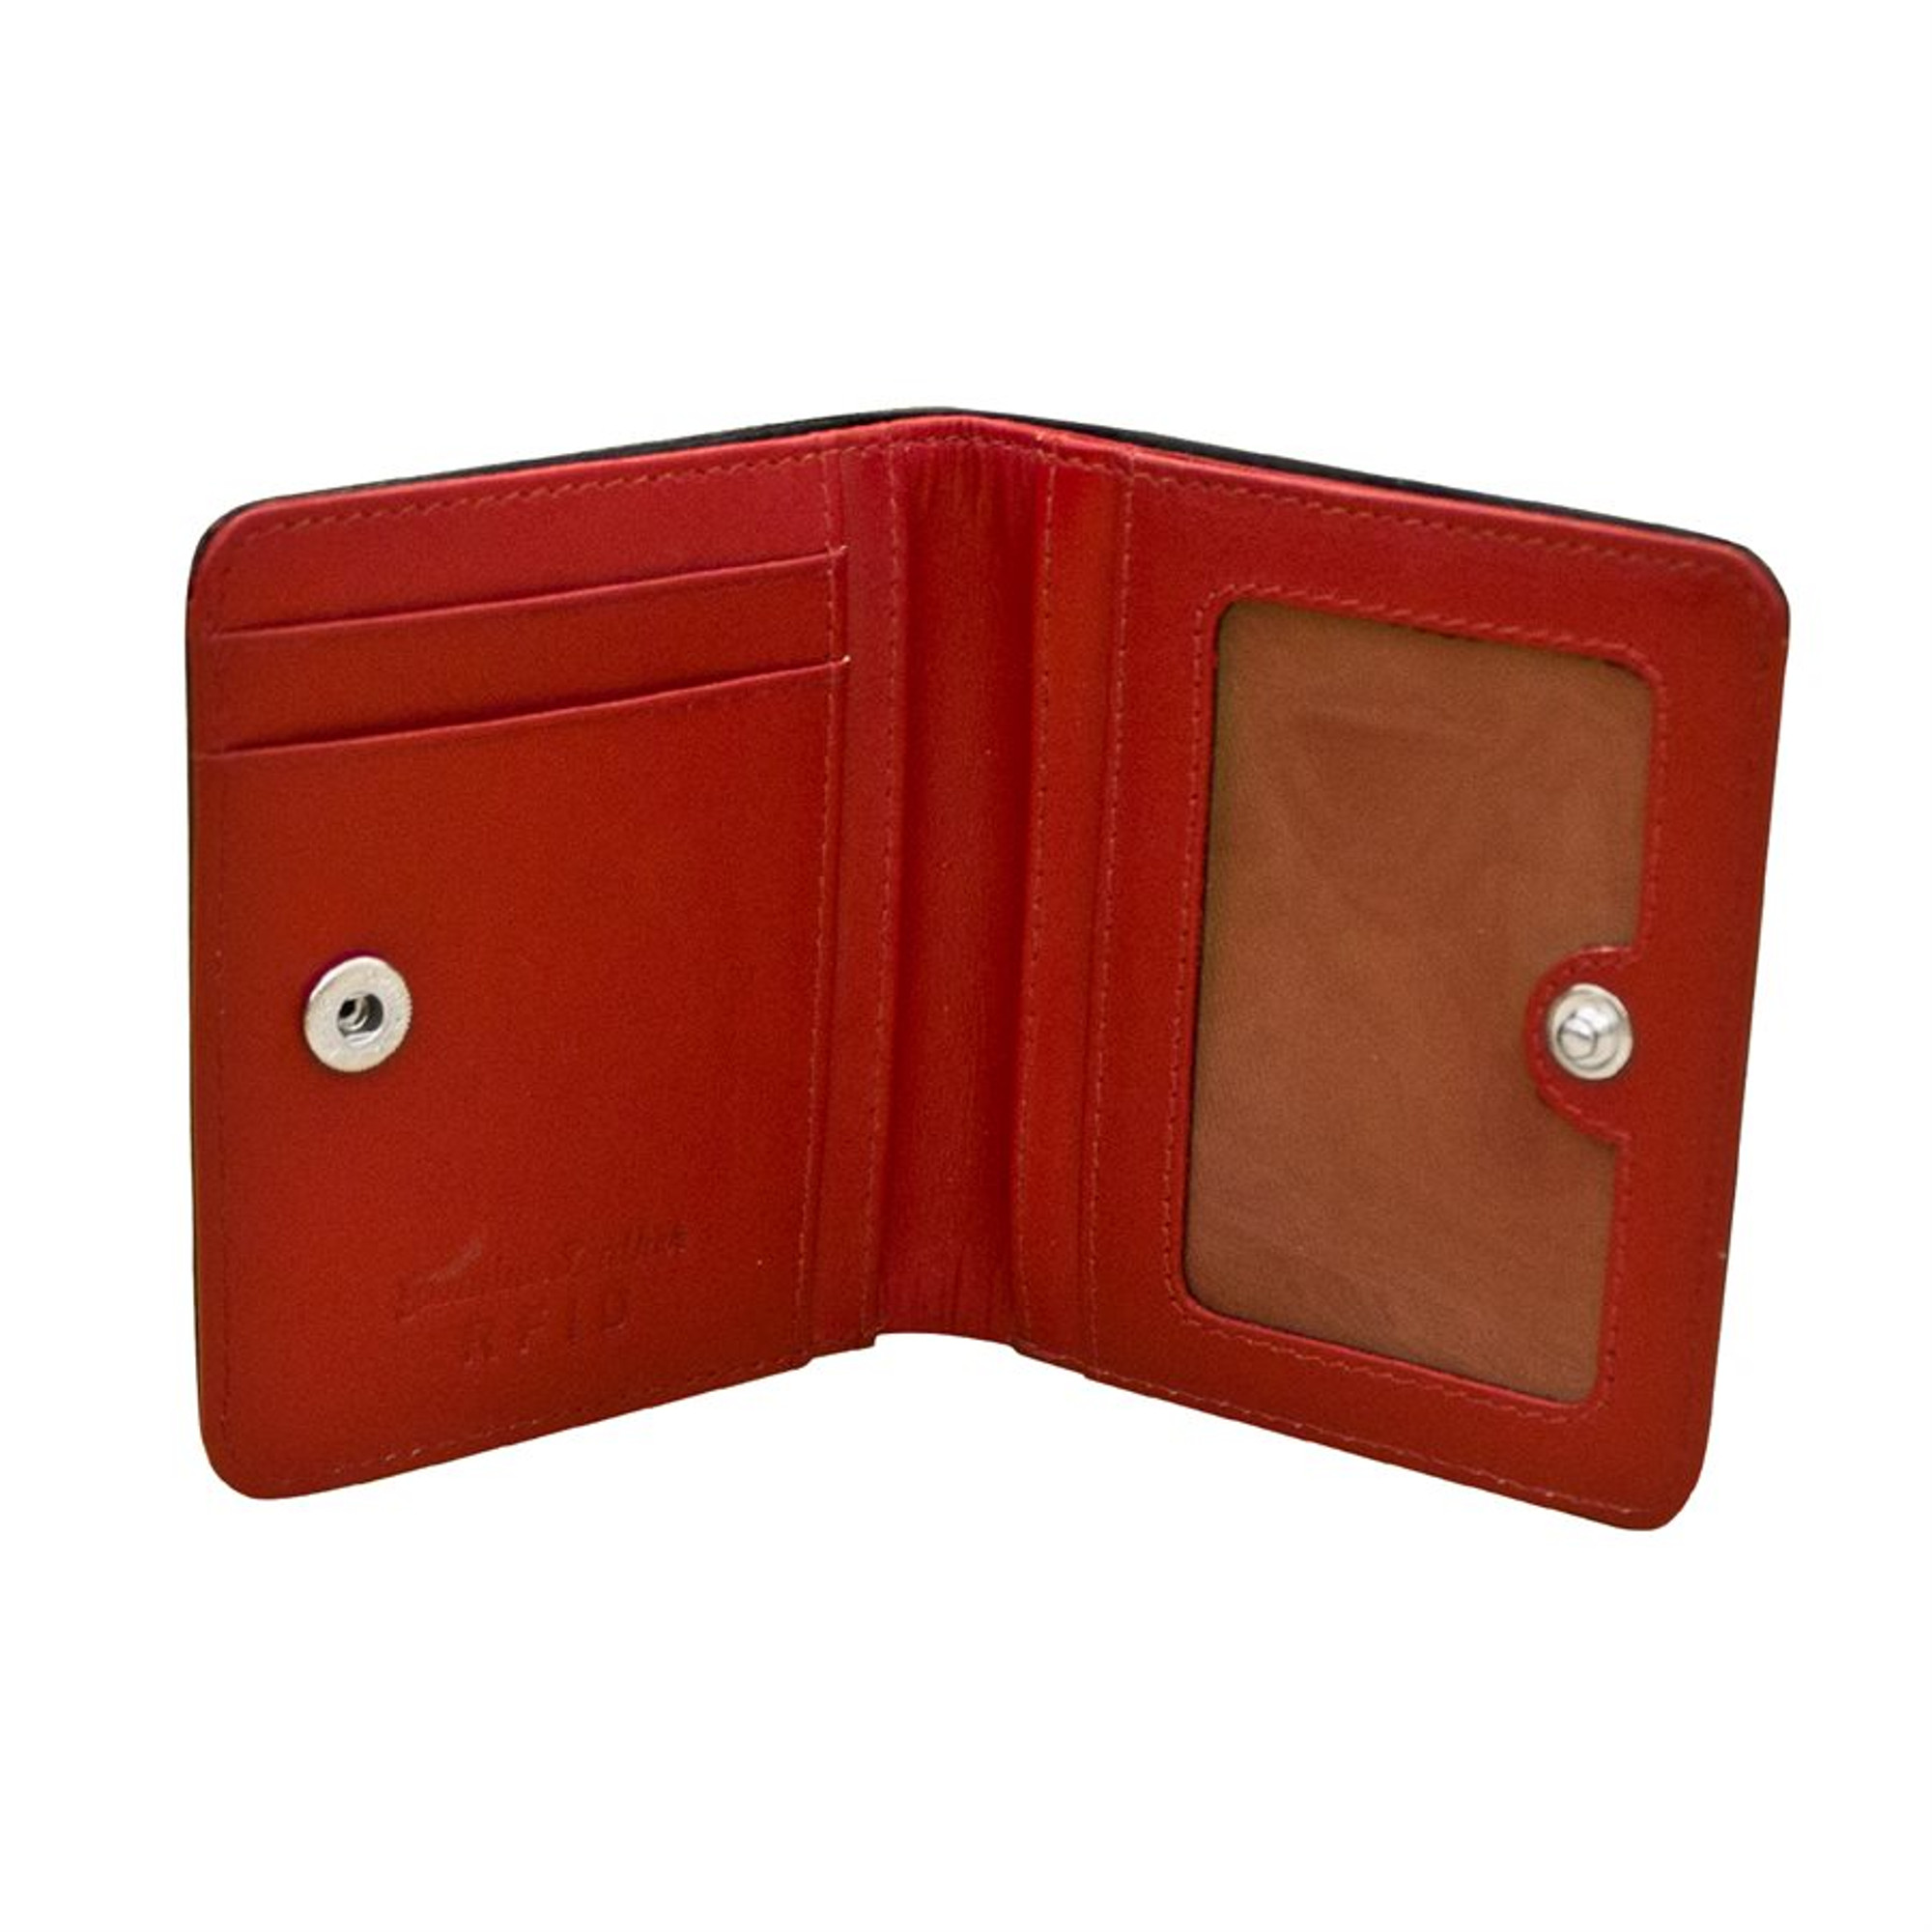 Men's RFID Blocking Leather Red Bi-fold Wallet Model : J521